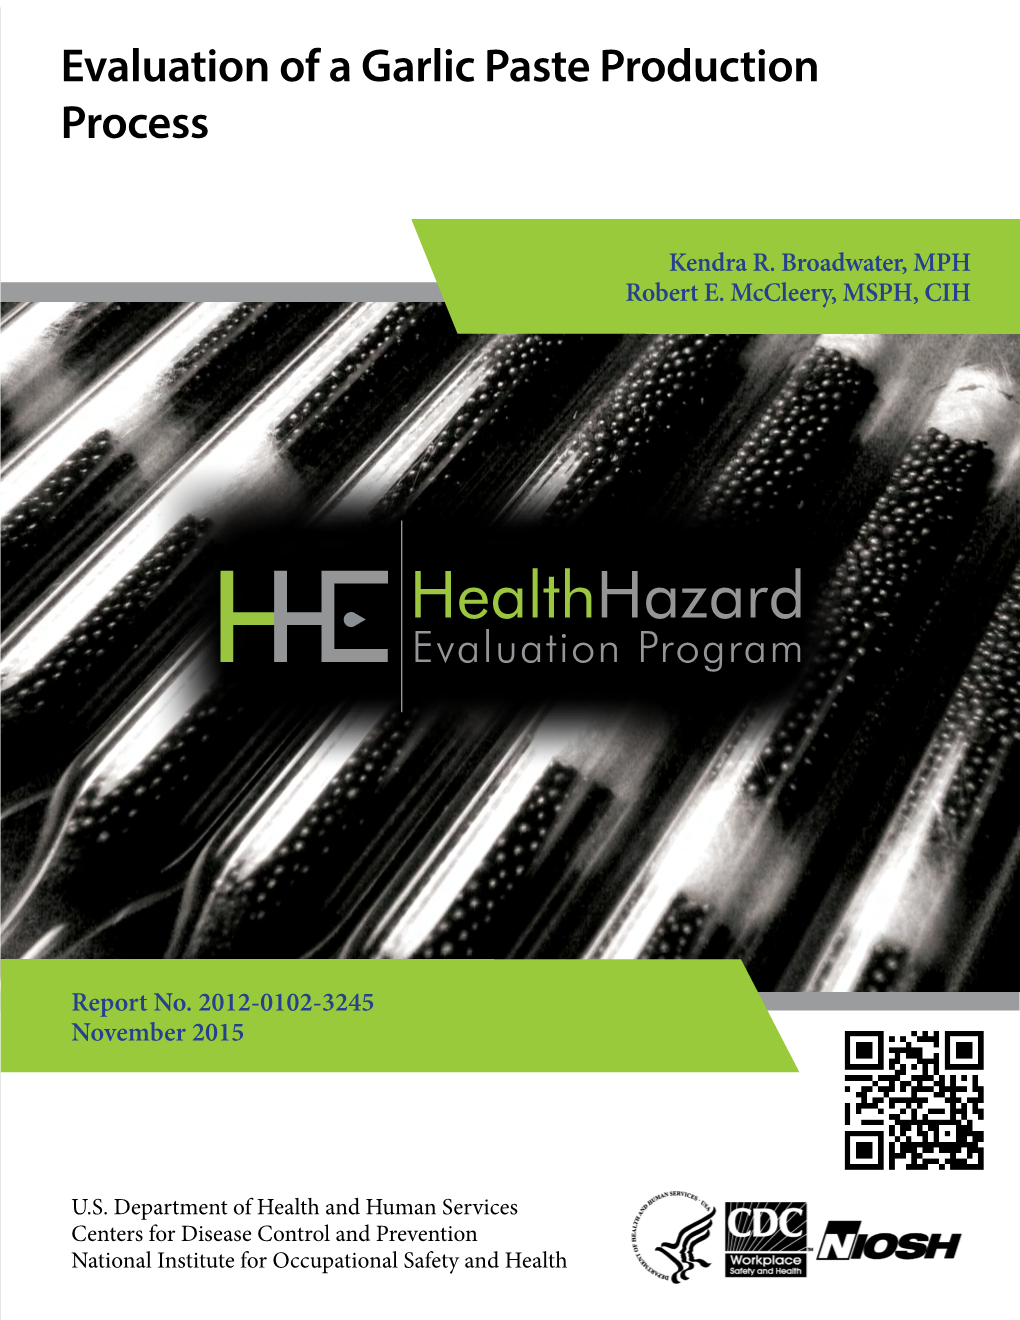 HHE Report No. HETA-2012-0102-3245, Evaluation of a Garlic Paste Production Process